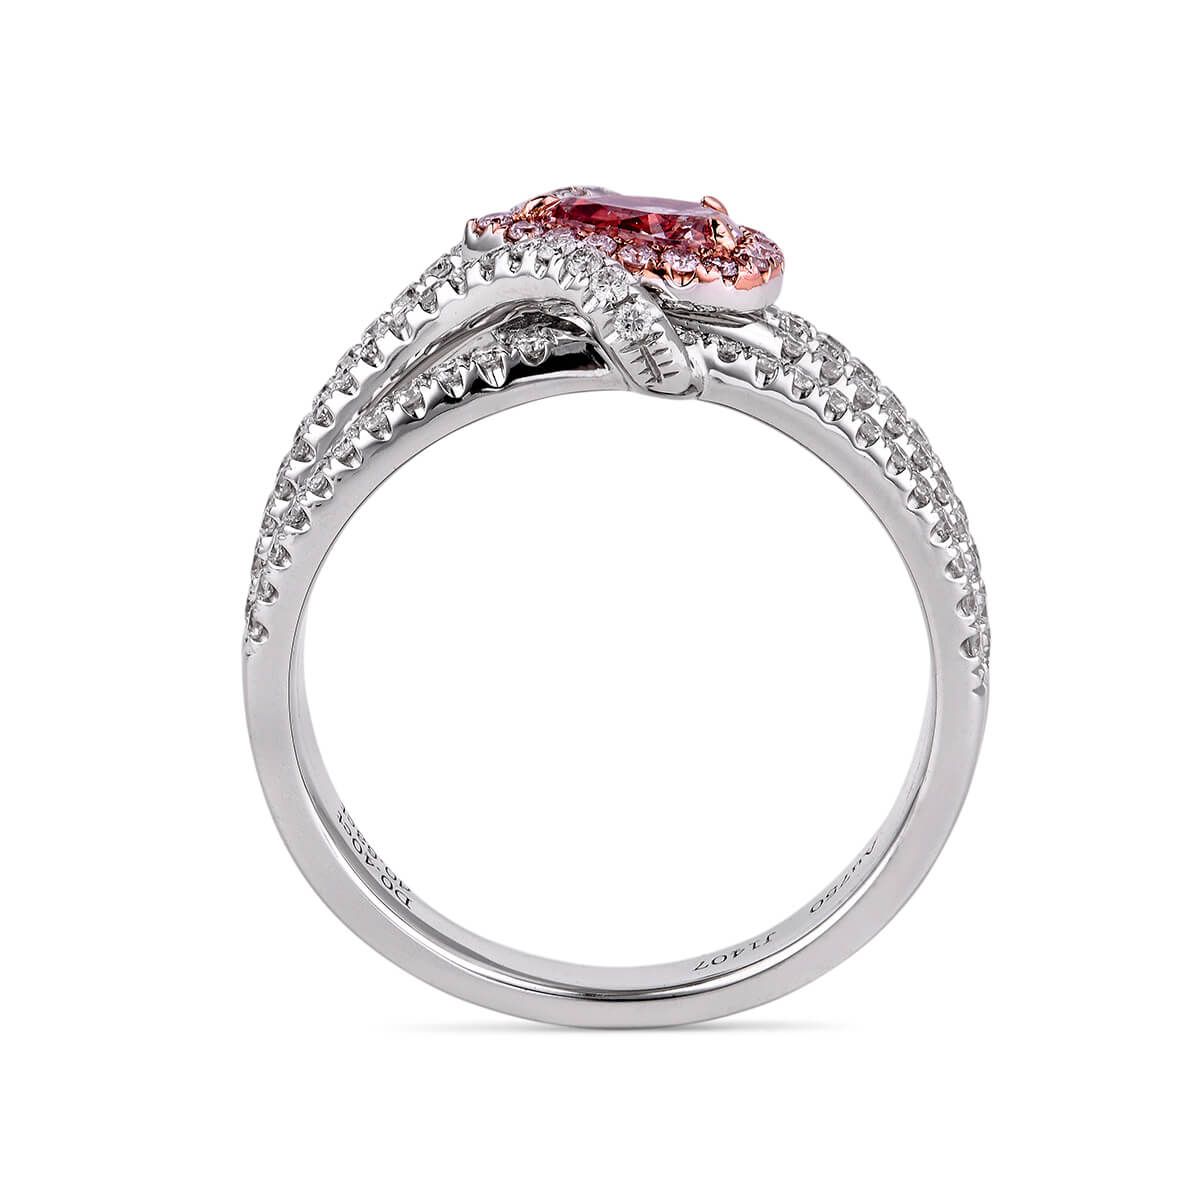 Fancy Pink Diamond Ring, 1.03 Ct. TW, Pear shape, GIA Certified, 6201470990